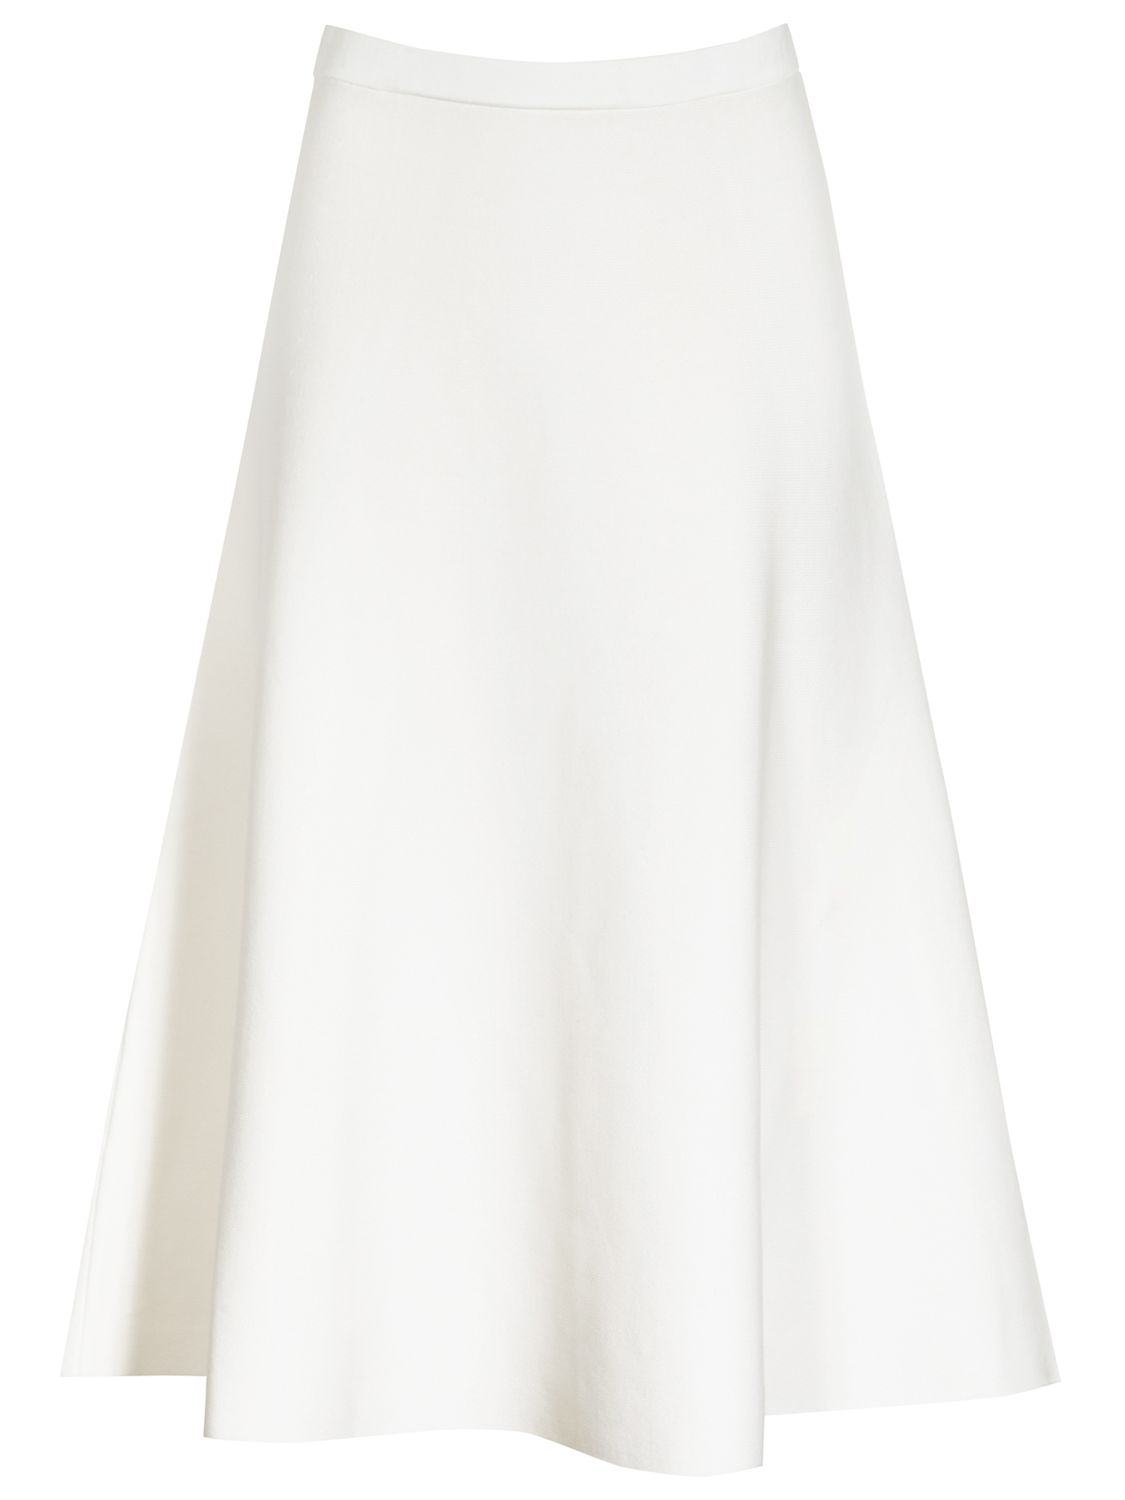 Reiss Loretta A-Line Knitted Skirt, White